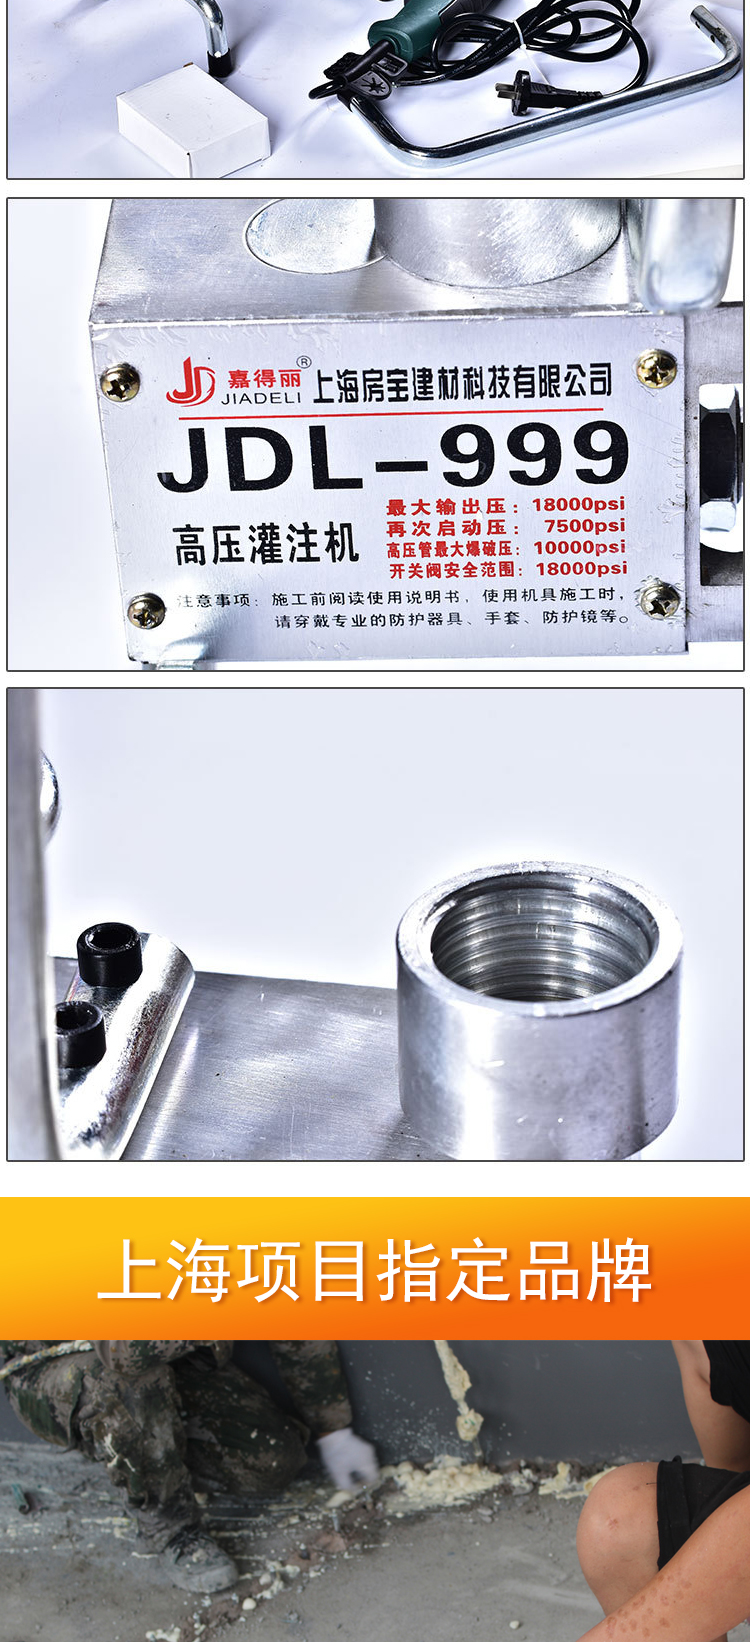 JDL-9999高压注浆机(图6)